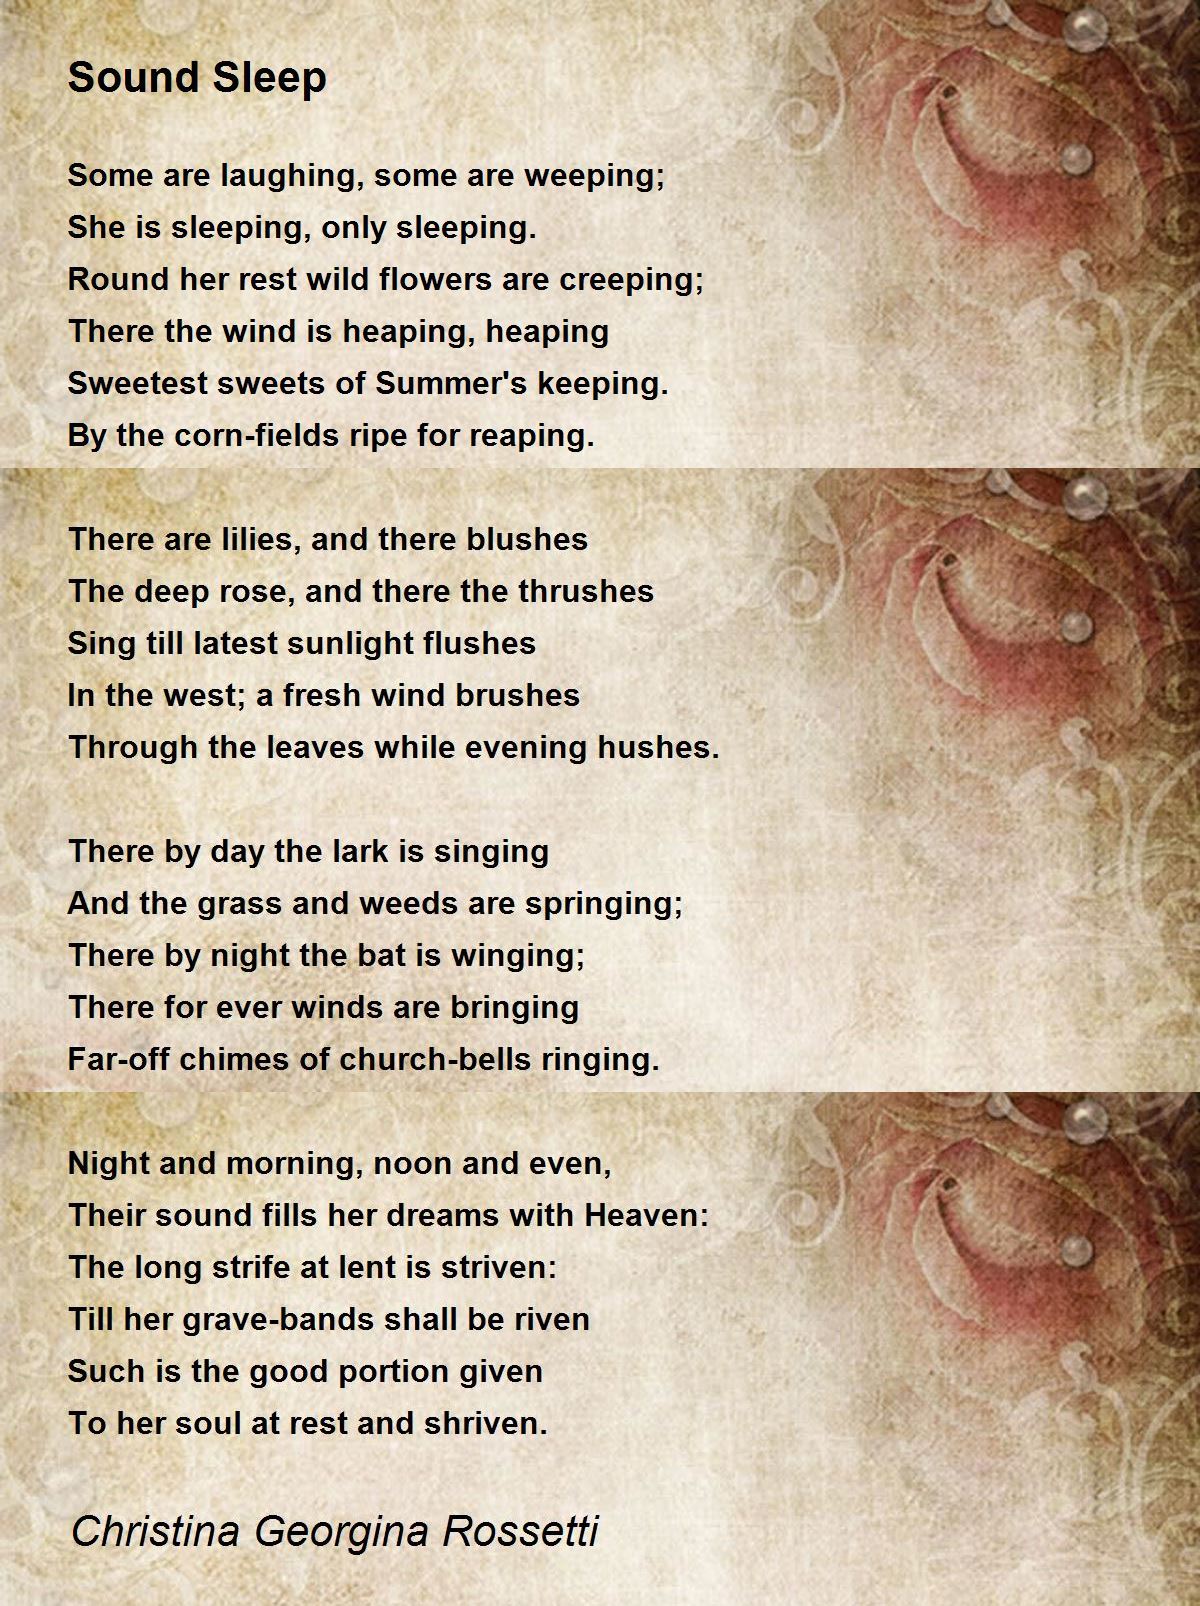 Sound Sleep Poem by Christina Georgina Rossetti - Poem Hunter